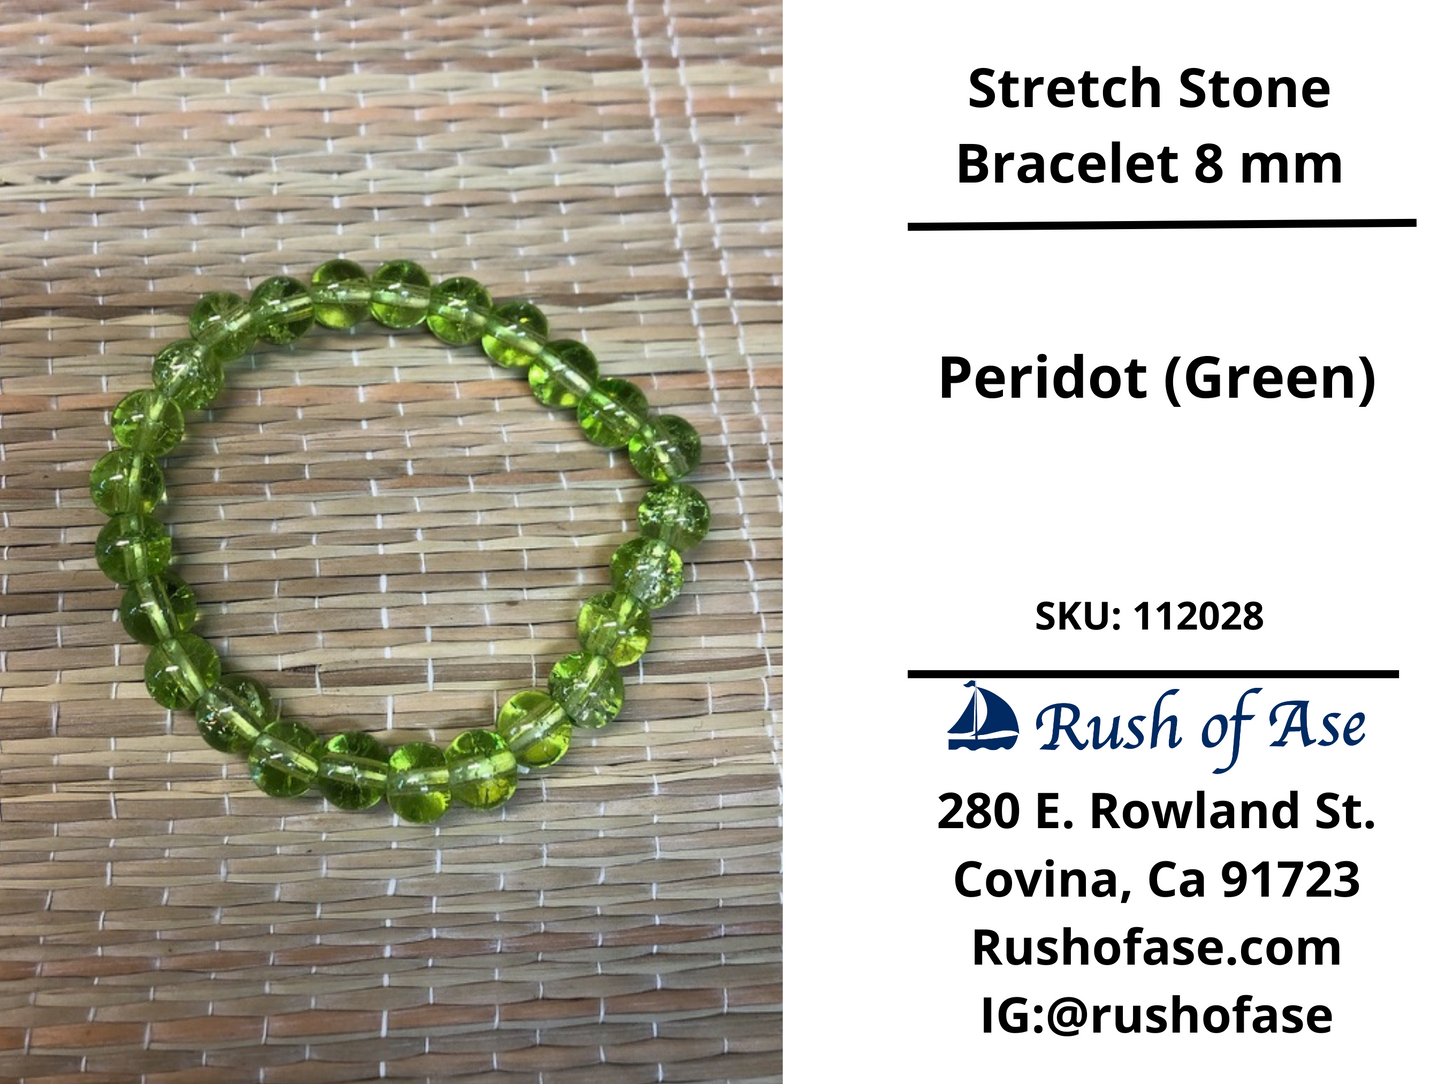 Stone Bracelet 8mm | Stretch Stone Bracelet